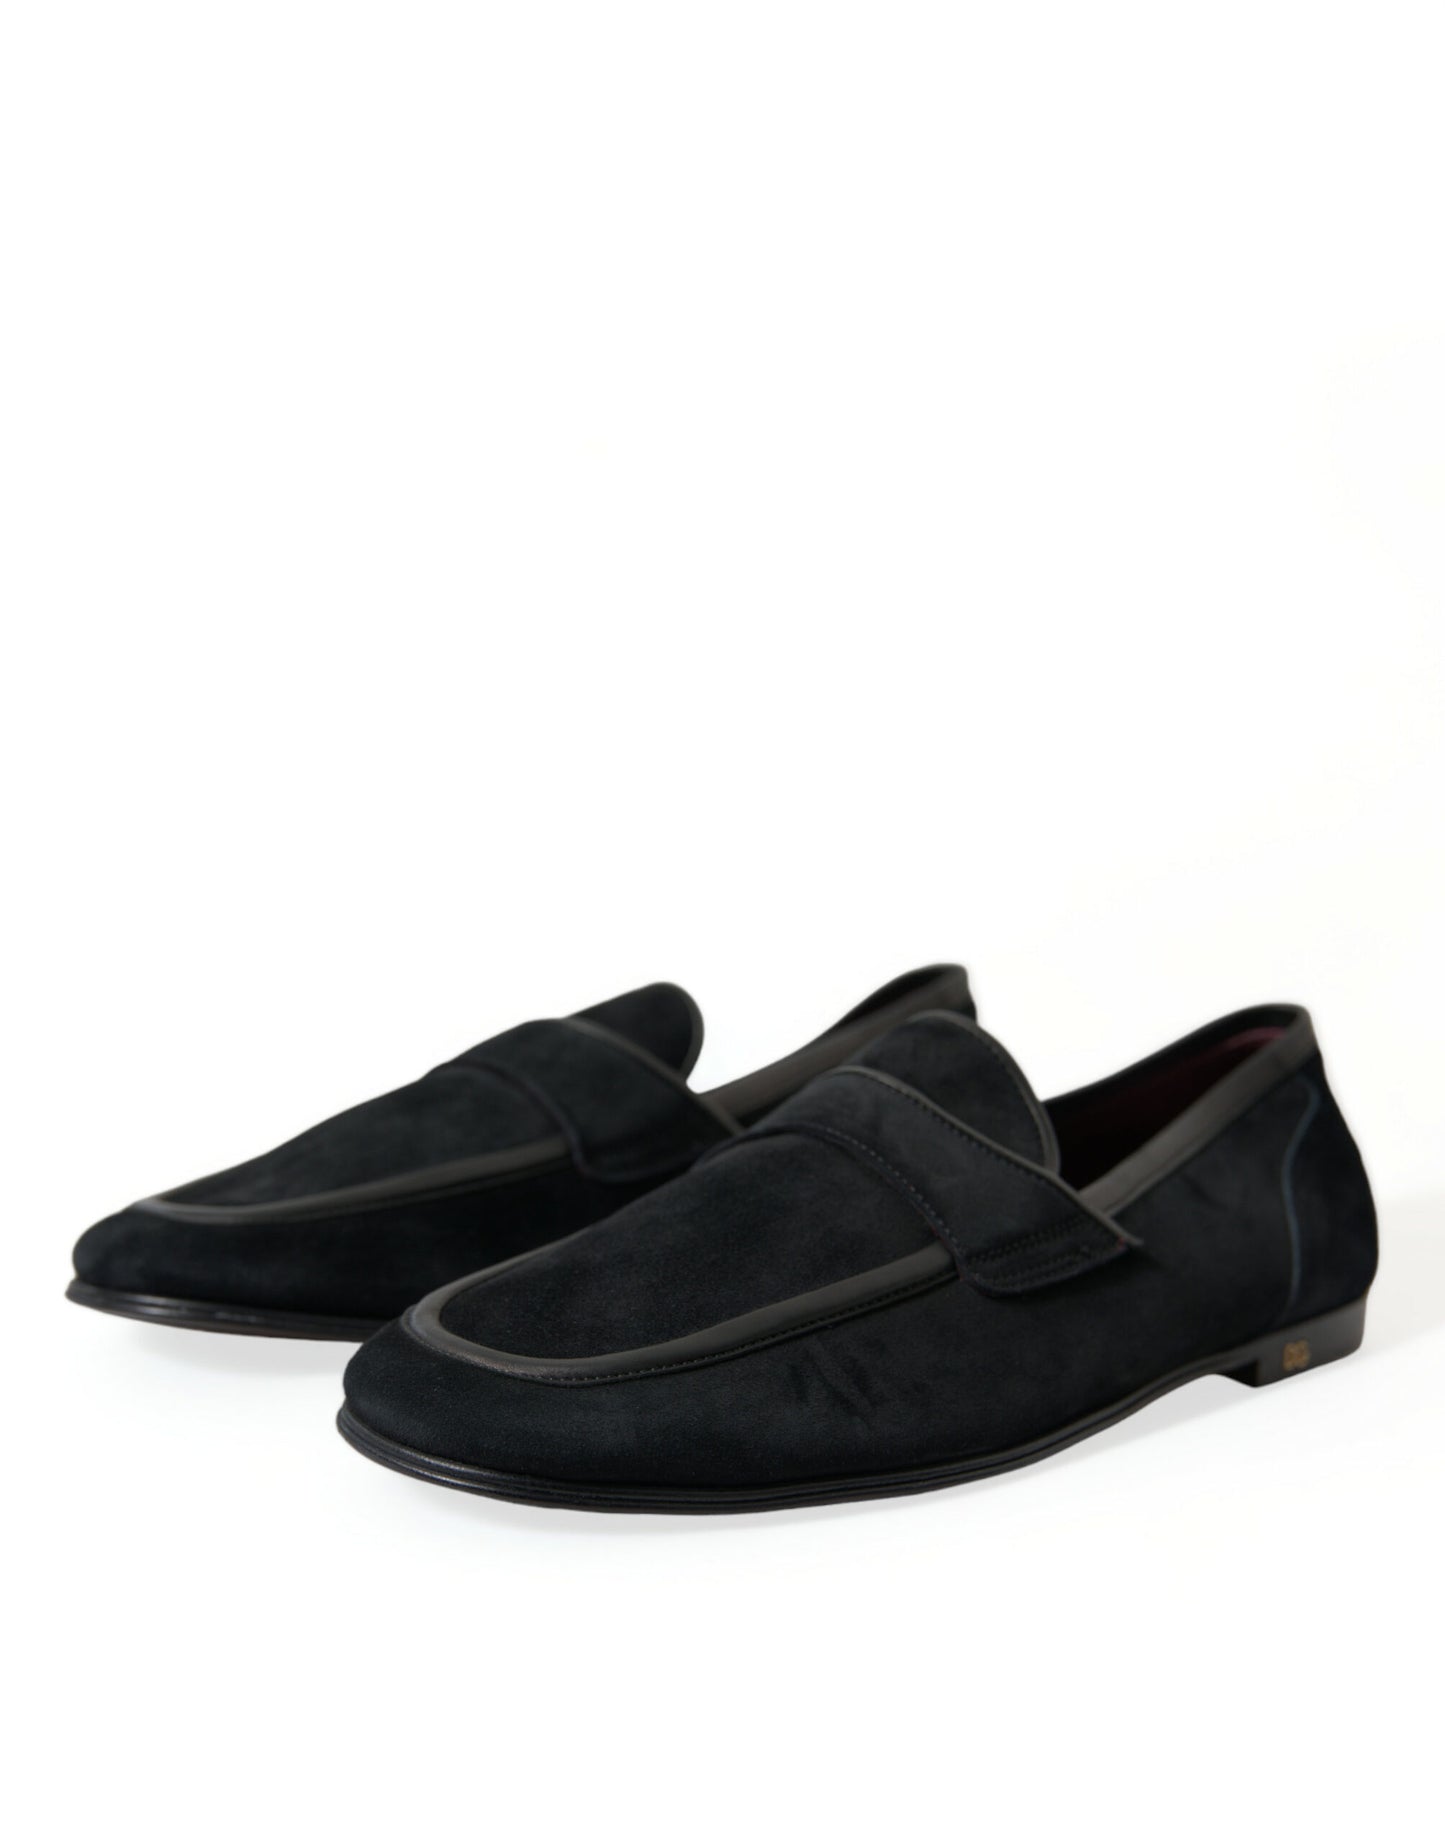 Fashionsarah.com Fashionsarah.com Dolce & Gabbana Black Velvet Slip On Loafers Dress Shoes